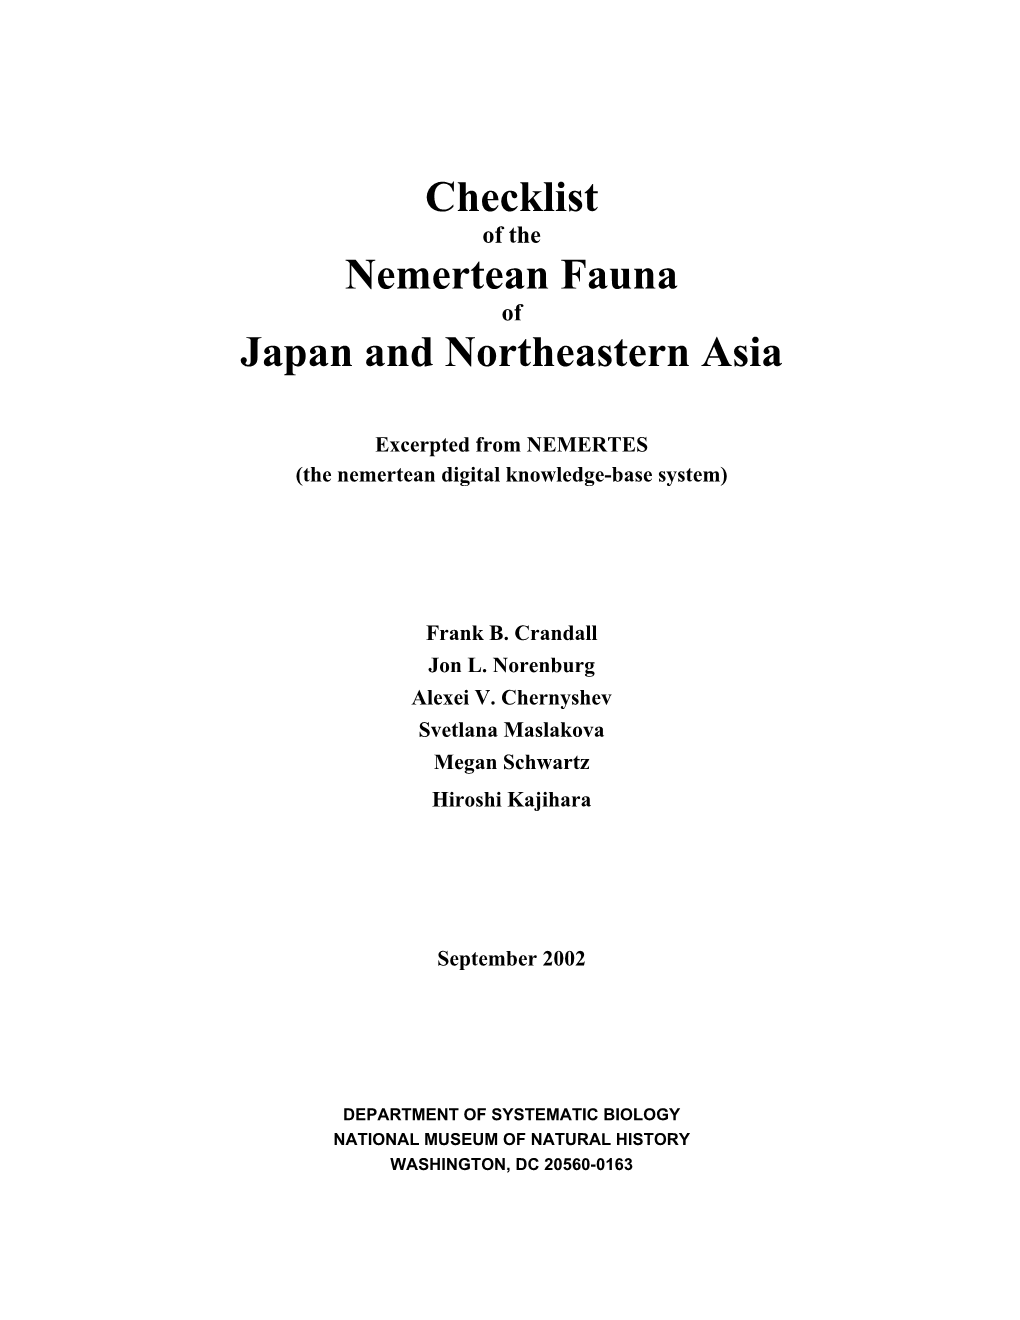 Checklist Nemertean Fauna Japan And